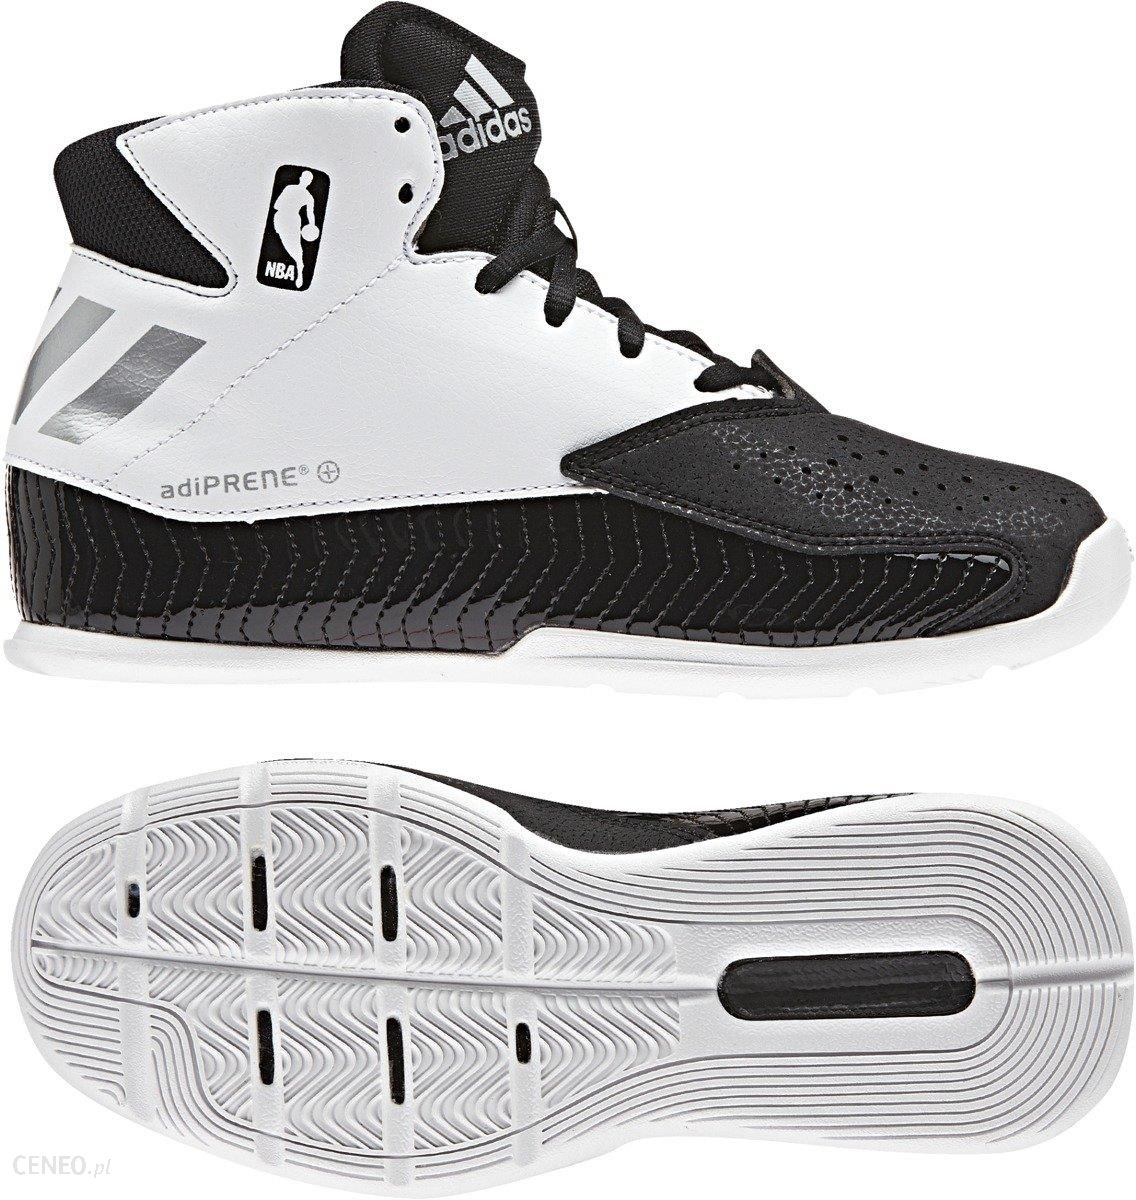 adidas adiprene plus basketball shoes